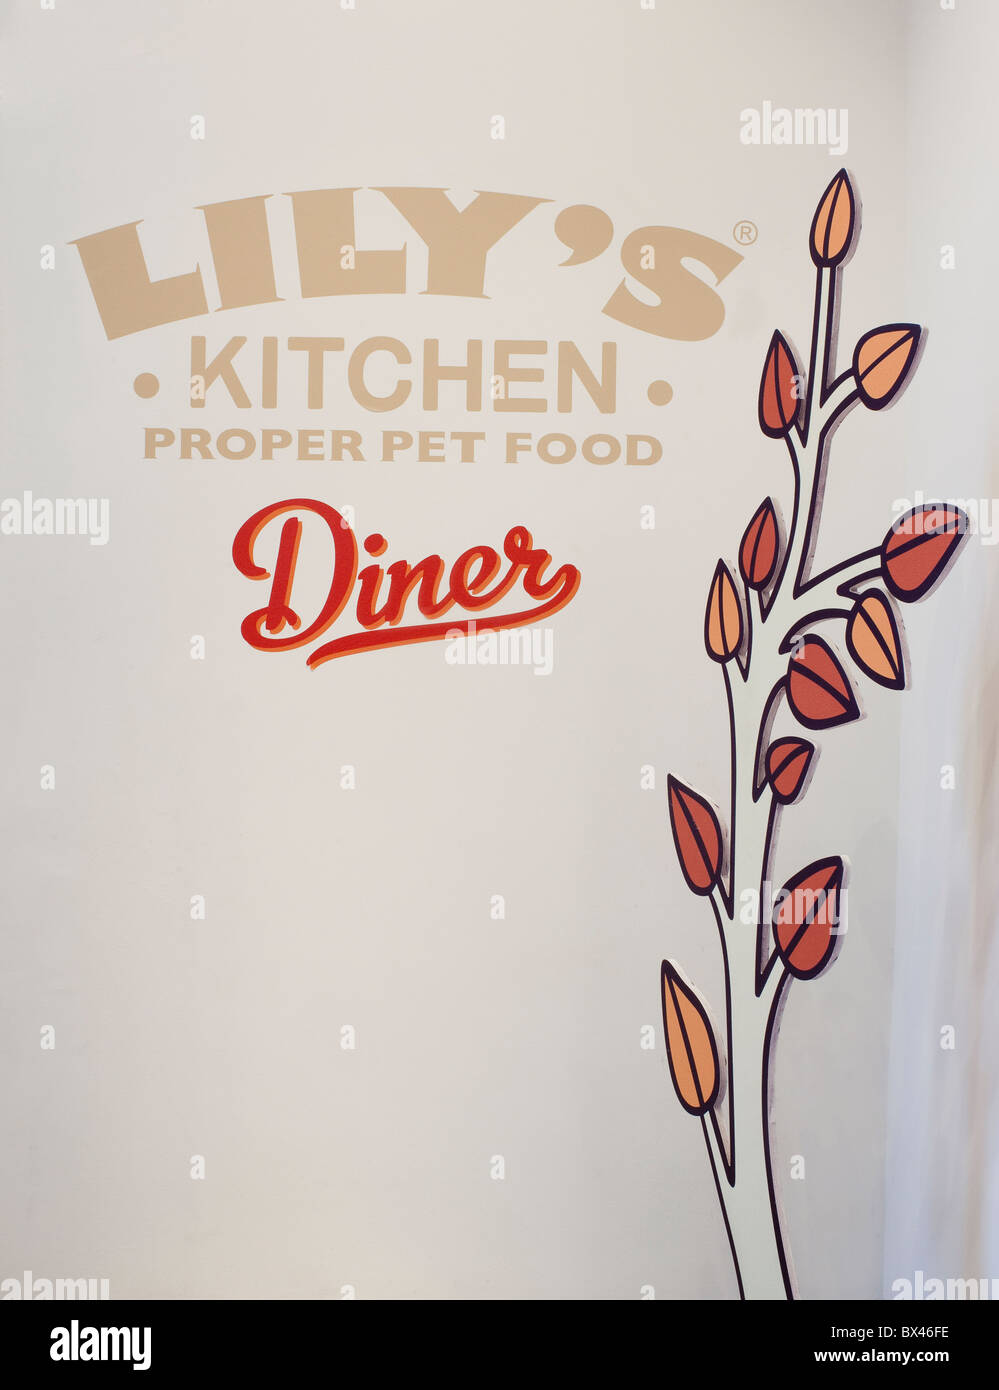 Lilys Wohnküche. Das erste Pop-up-Doggy Diner, London UK Stockfoto